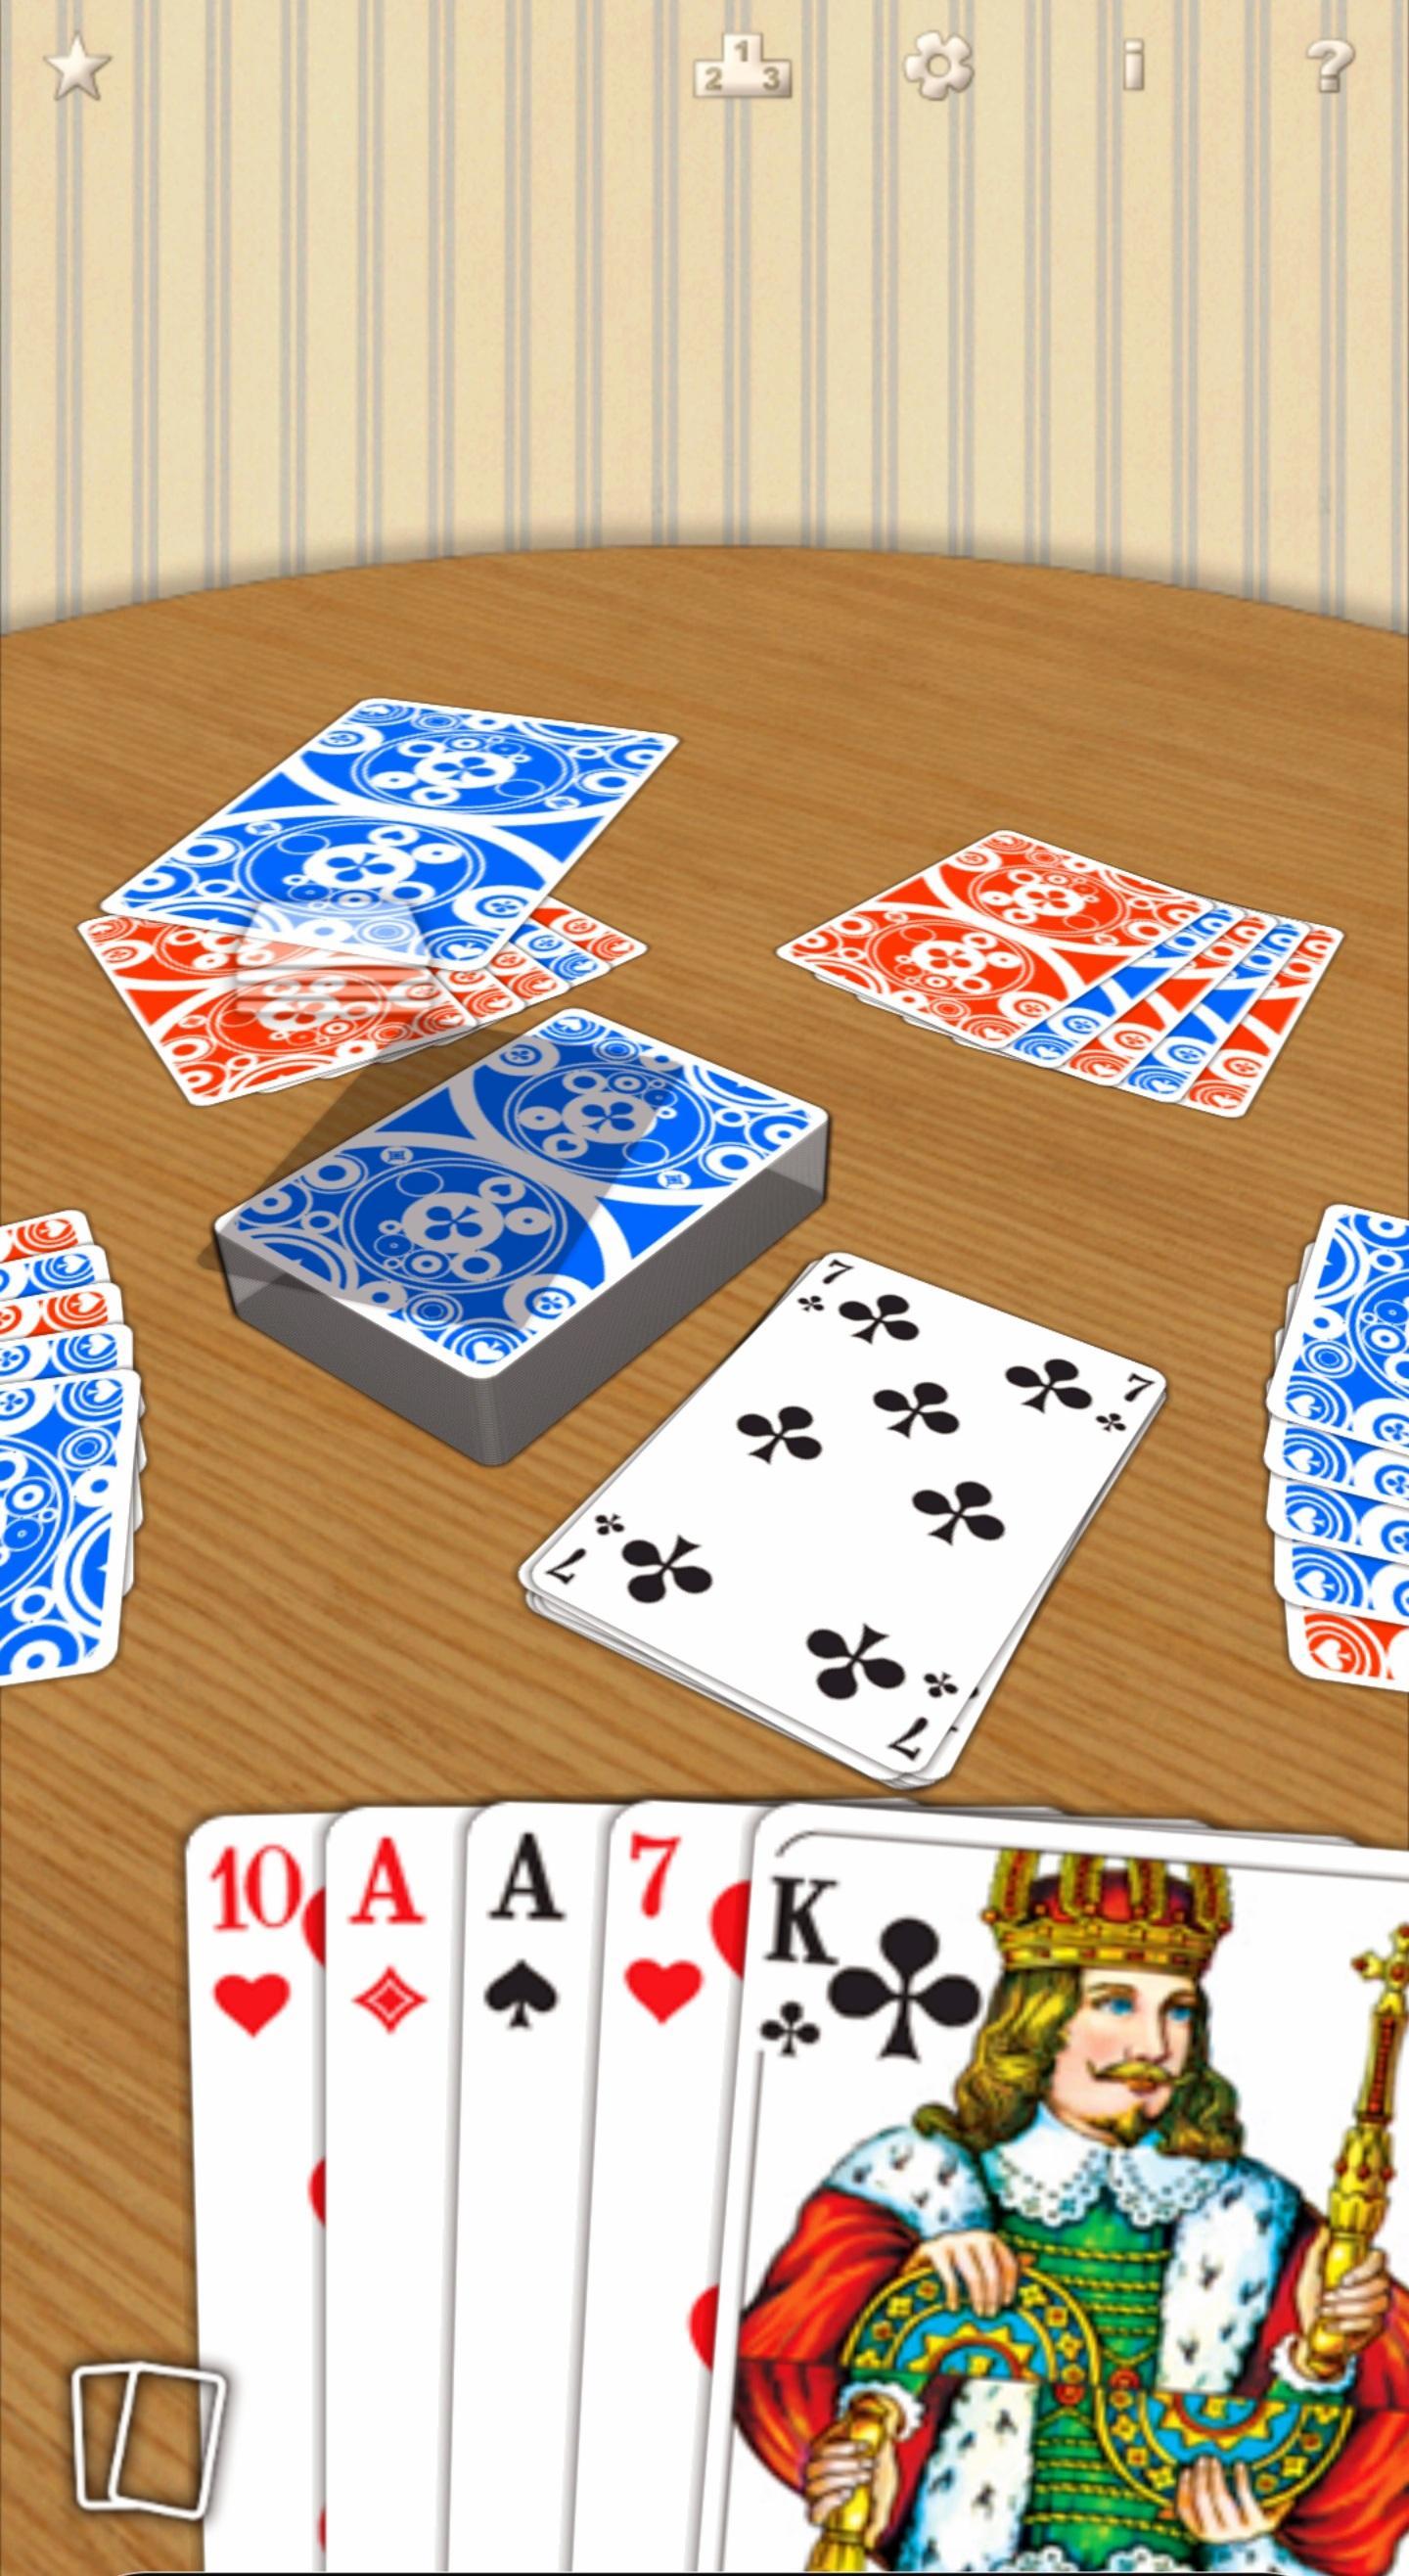 Crazy Eights free card game 1.6.96 Screenshot 22